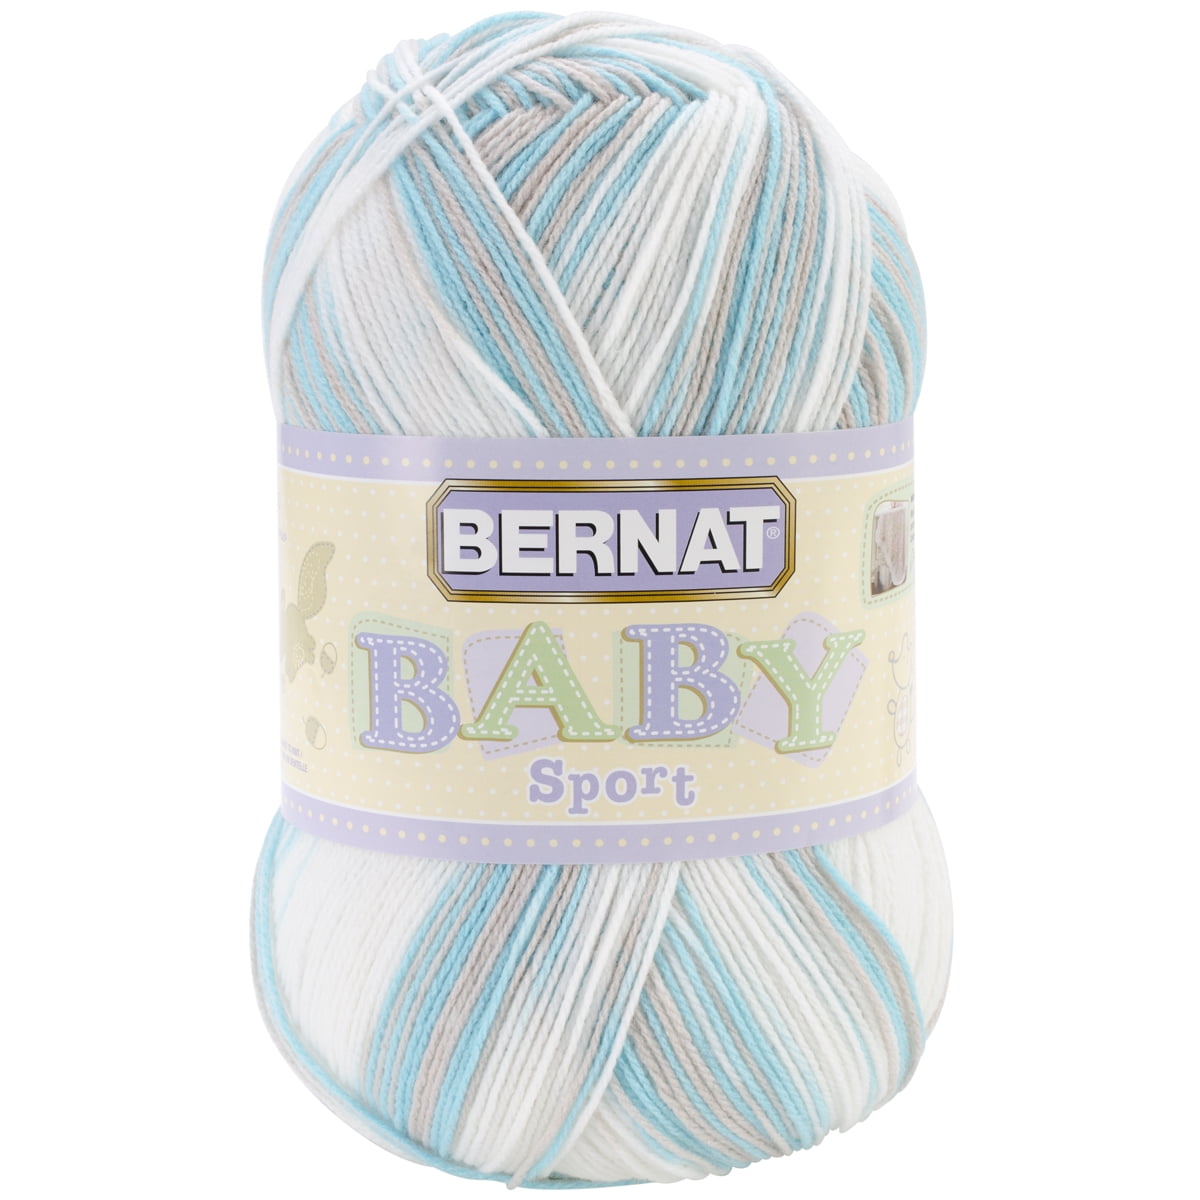 9.8 oz Gauge 3 Light Bernat Baby Sport Big Ball Ombre Yarn Funny Prints 100% Acrylic 